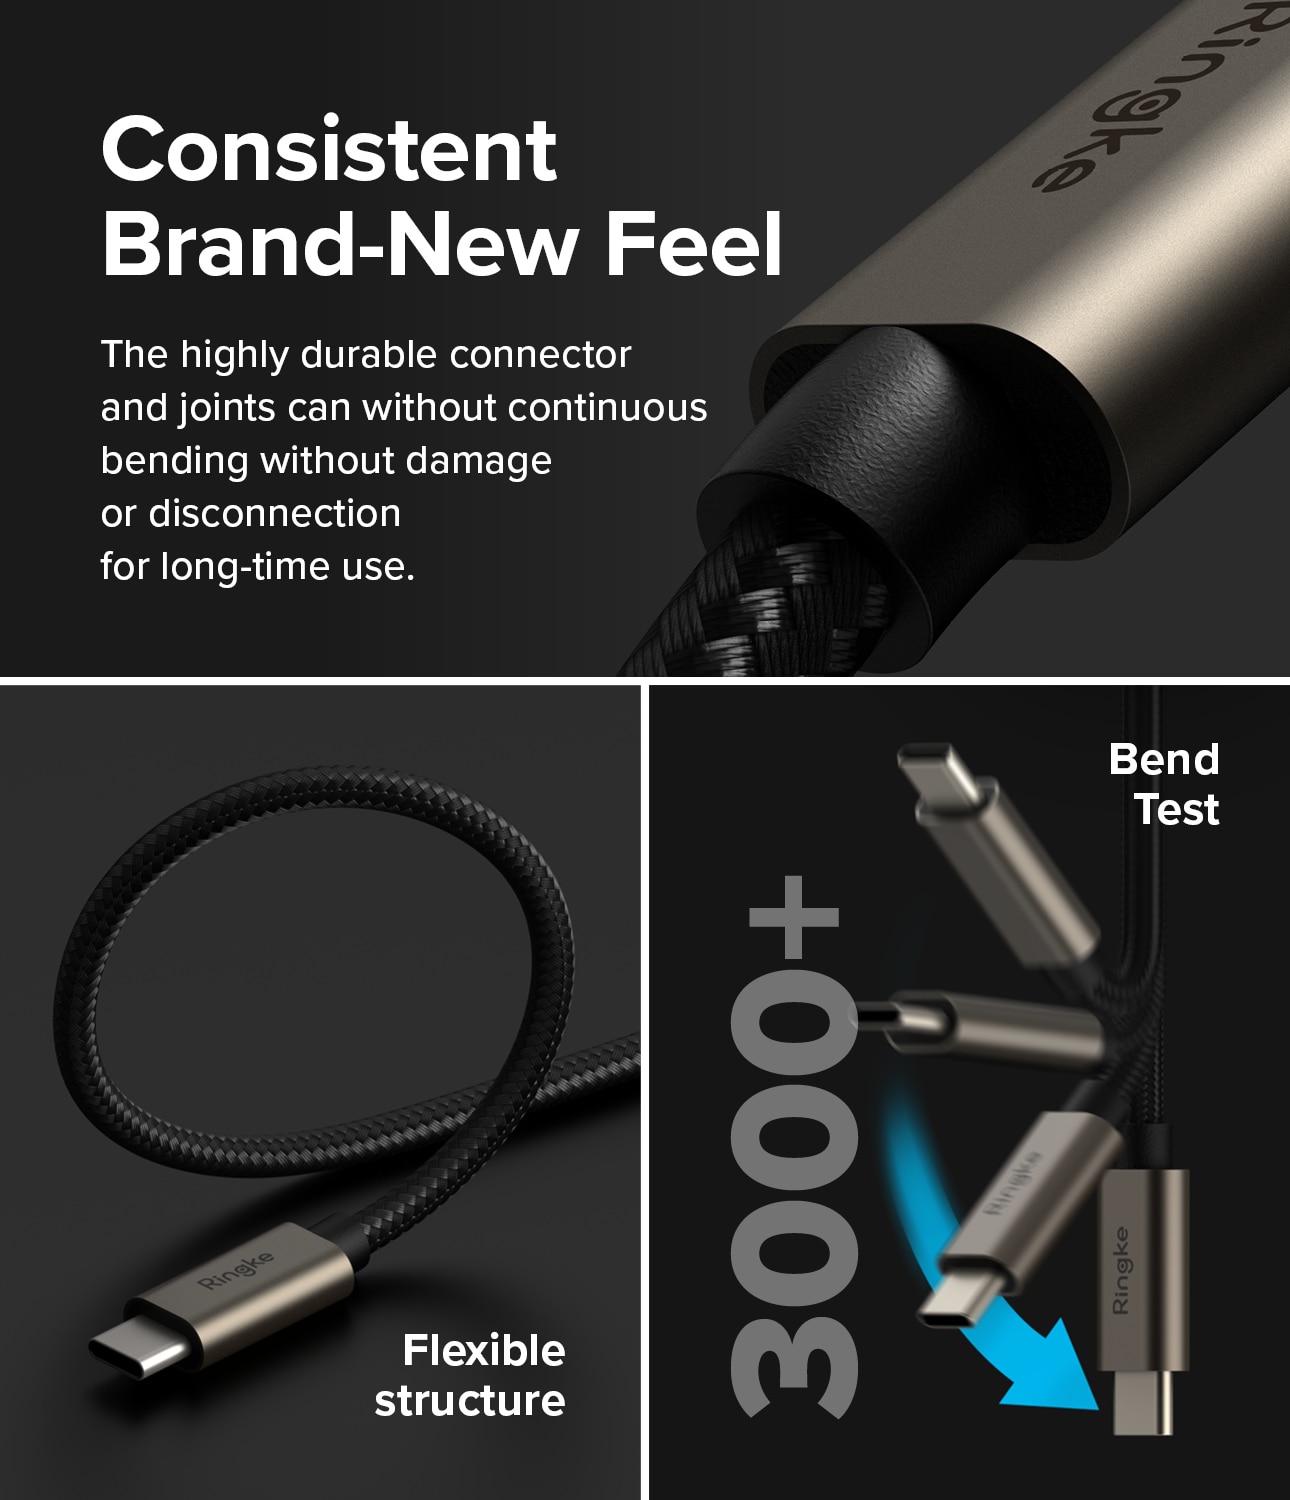 Fast Charging Basic Kabel USB-C -> USB-C 1m,  schwarz